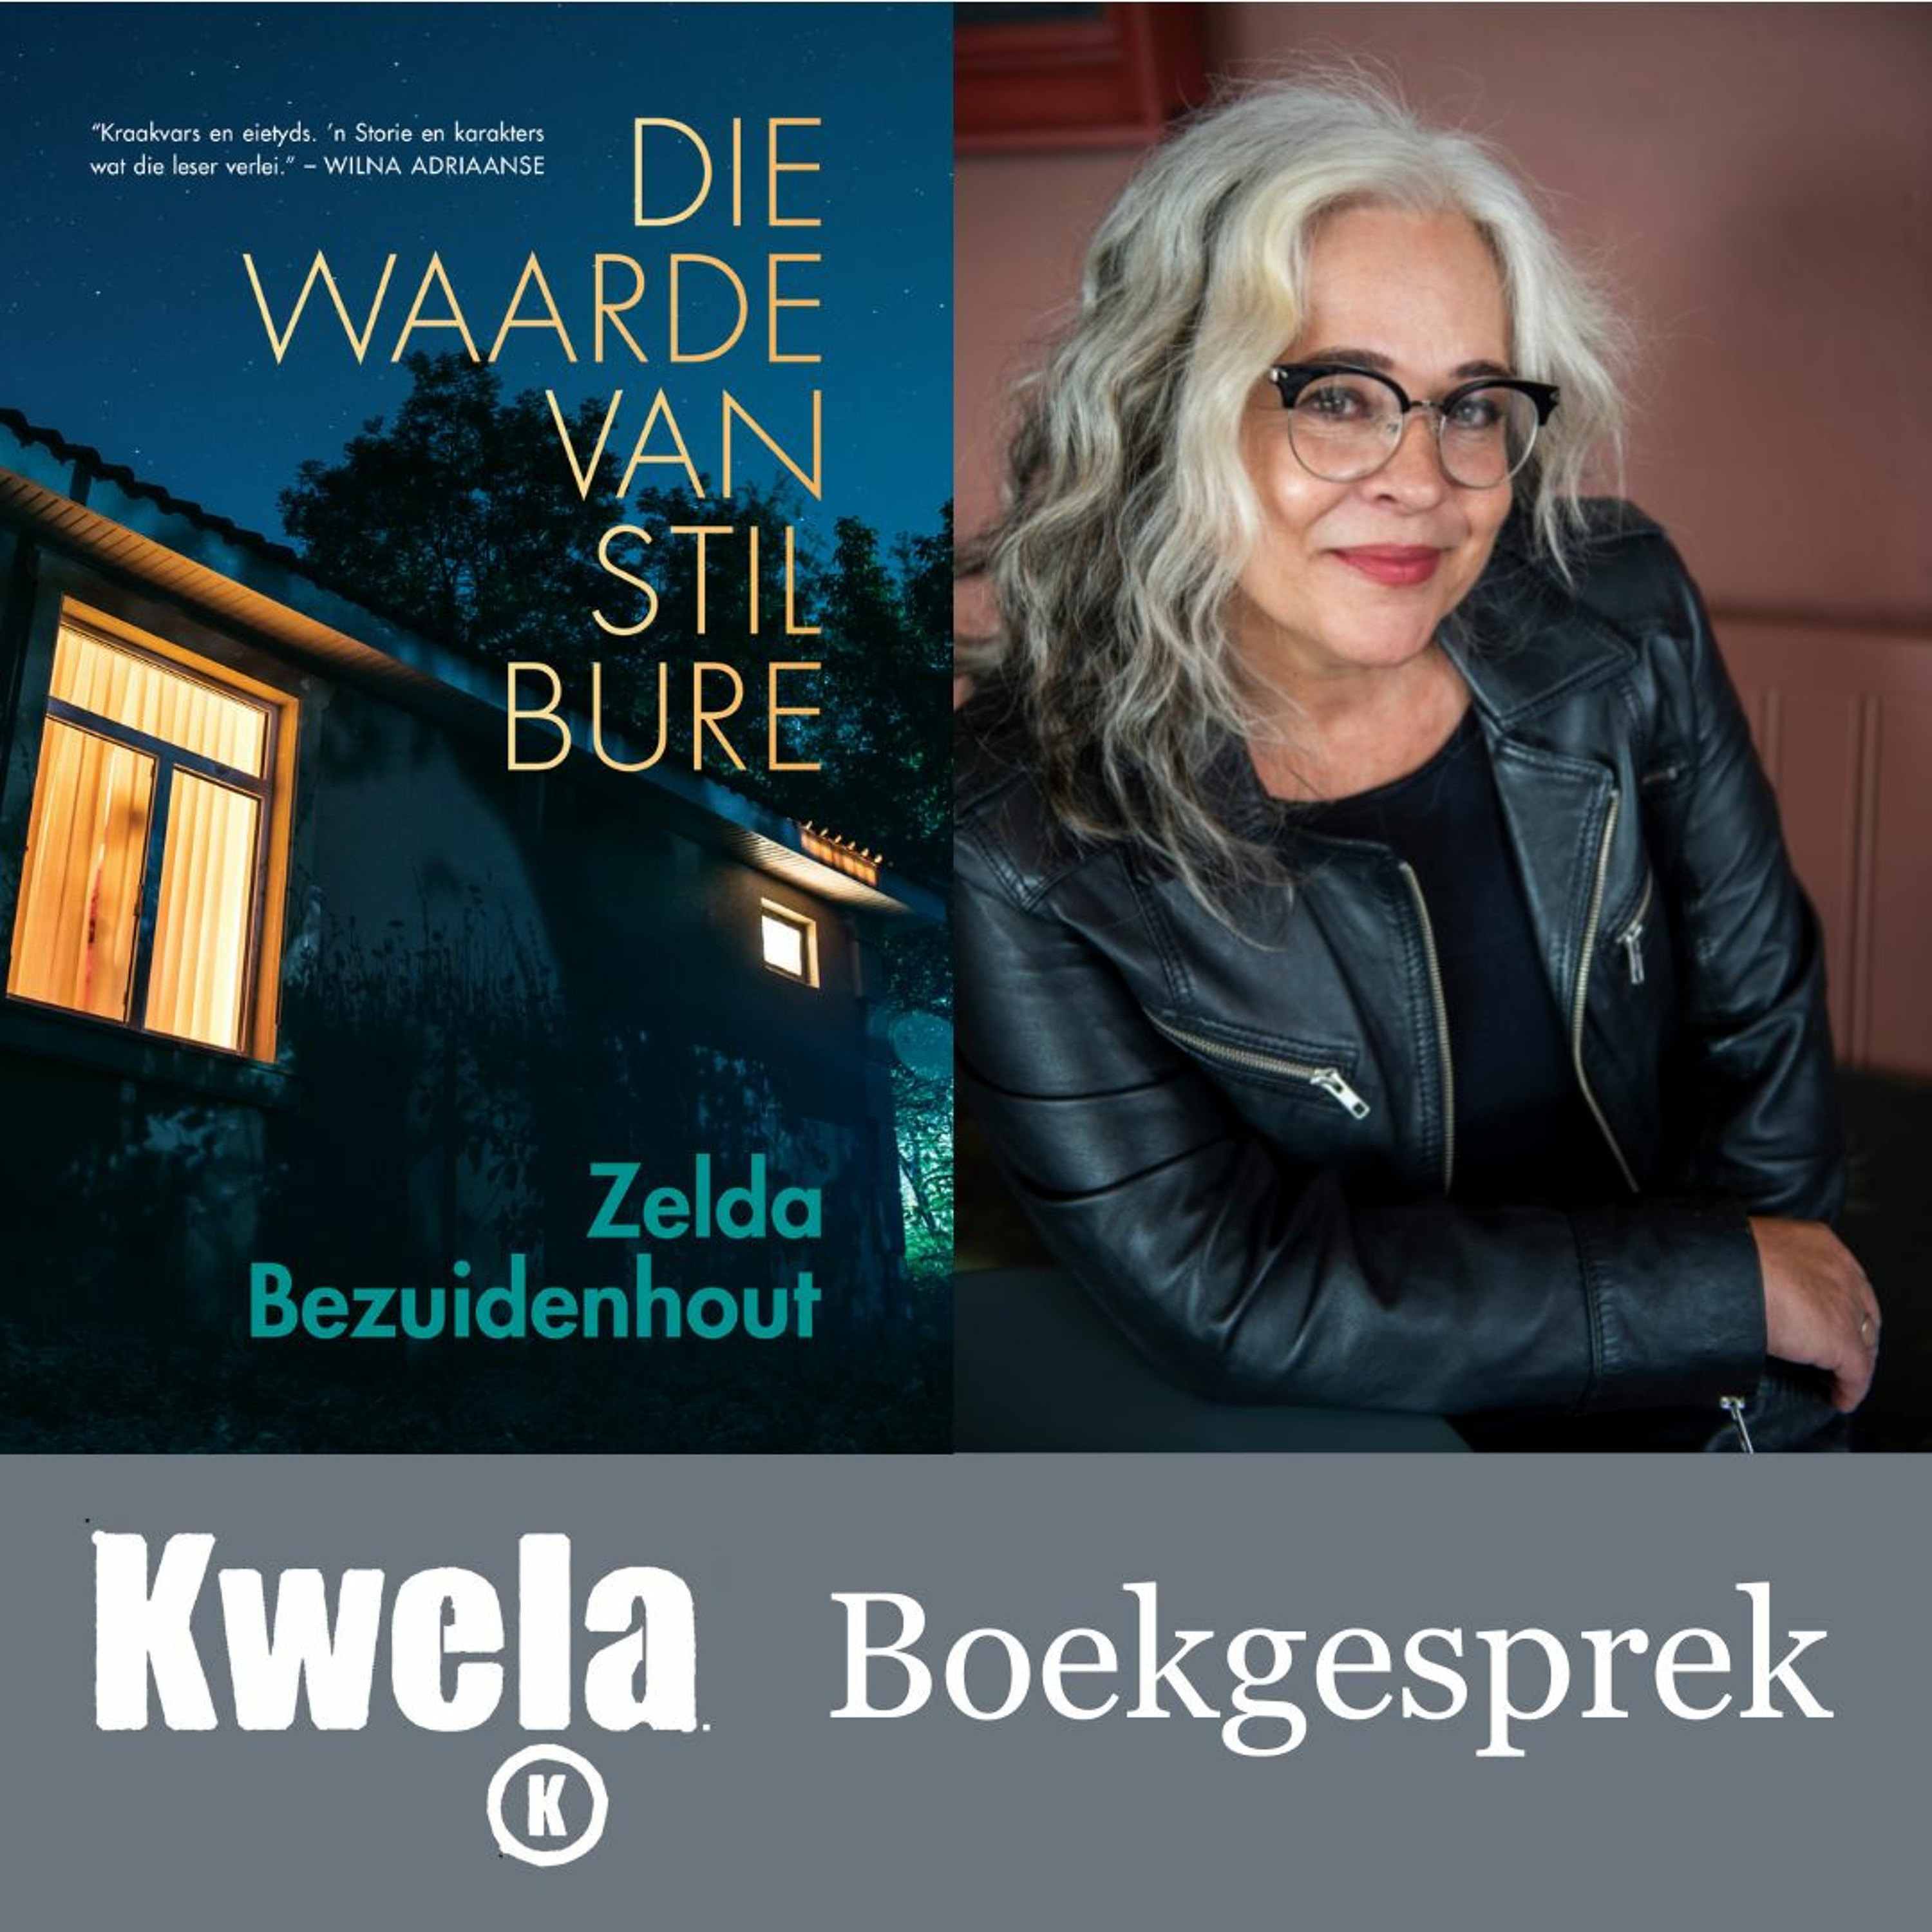 Kwela-boekgesprek: Cintaine Schutte gesels met Zelda Bezuidenhout oor Die waarde van stil bure